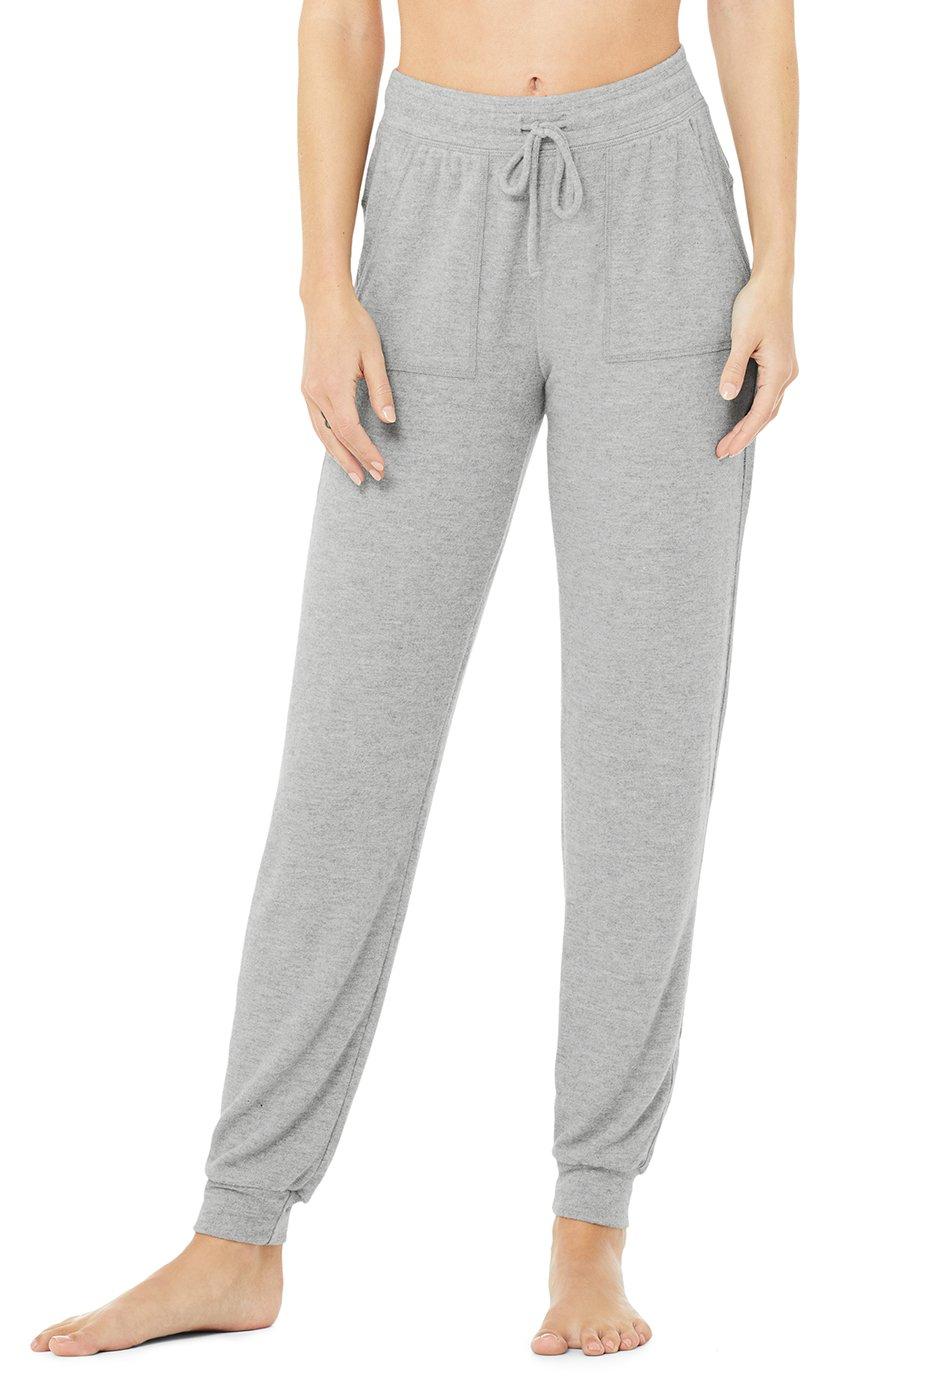 Alo Yoga Cashmere Soho Sweatpant in Gray - Lyst